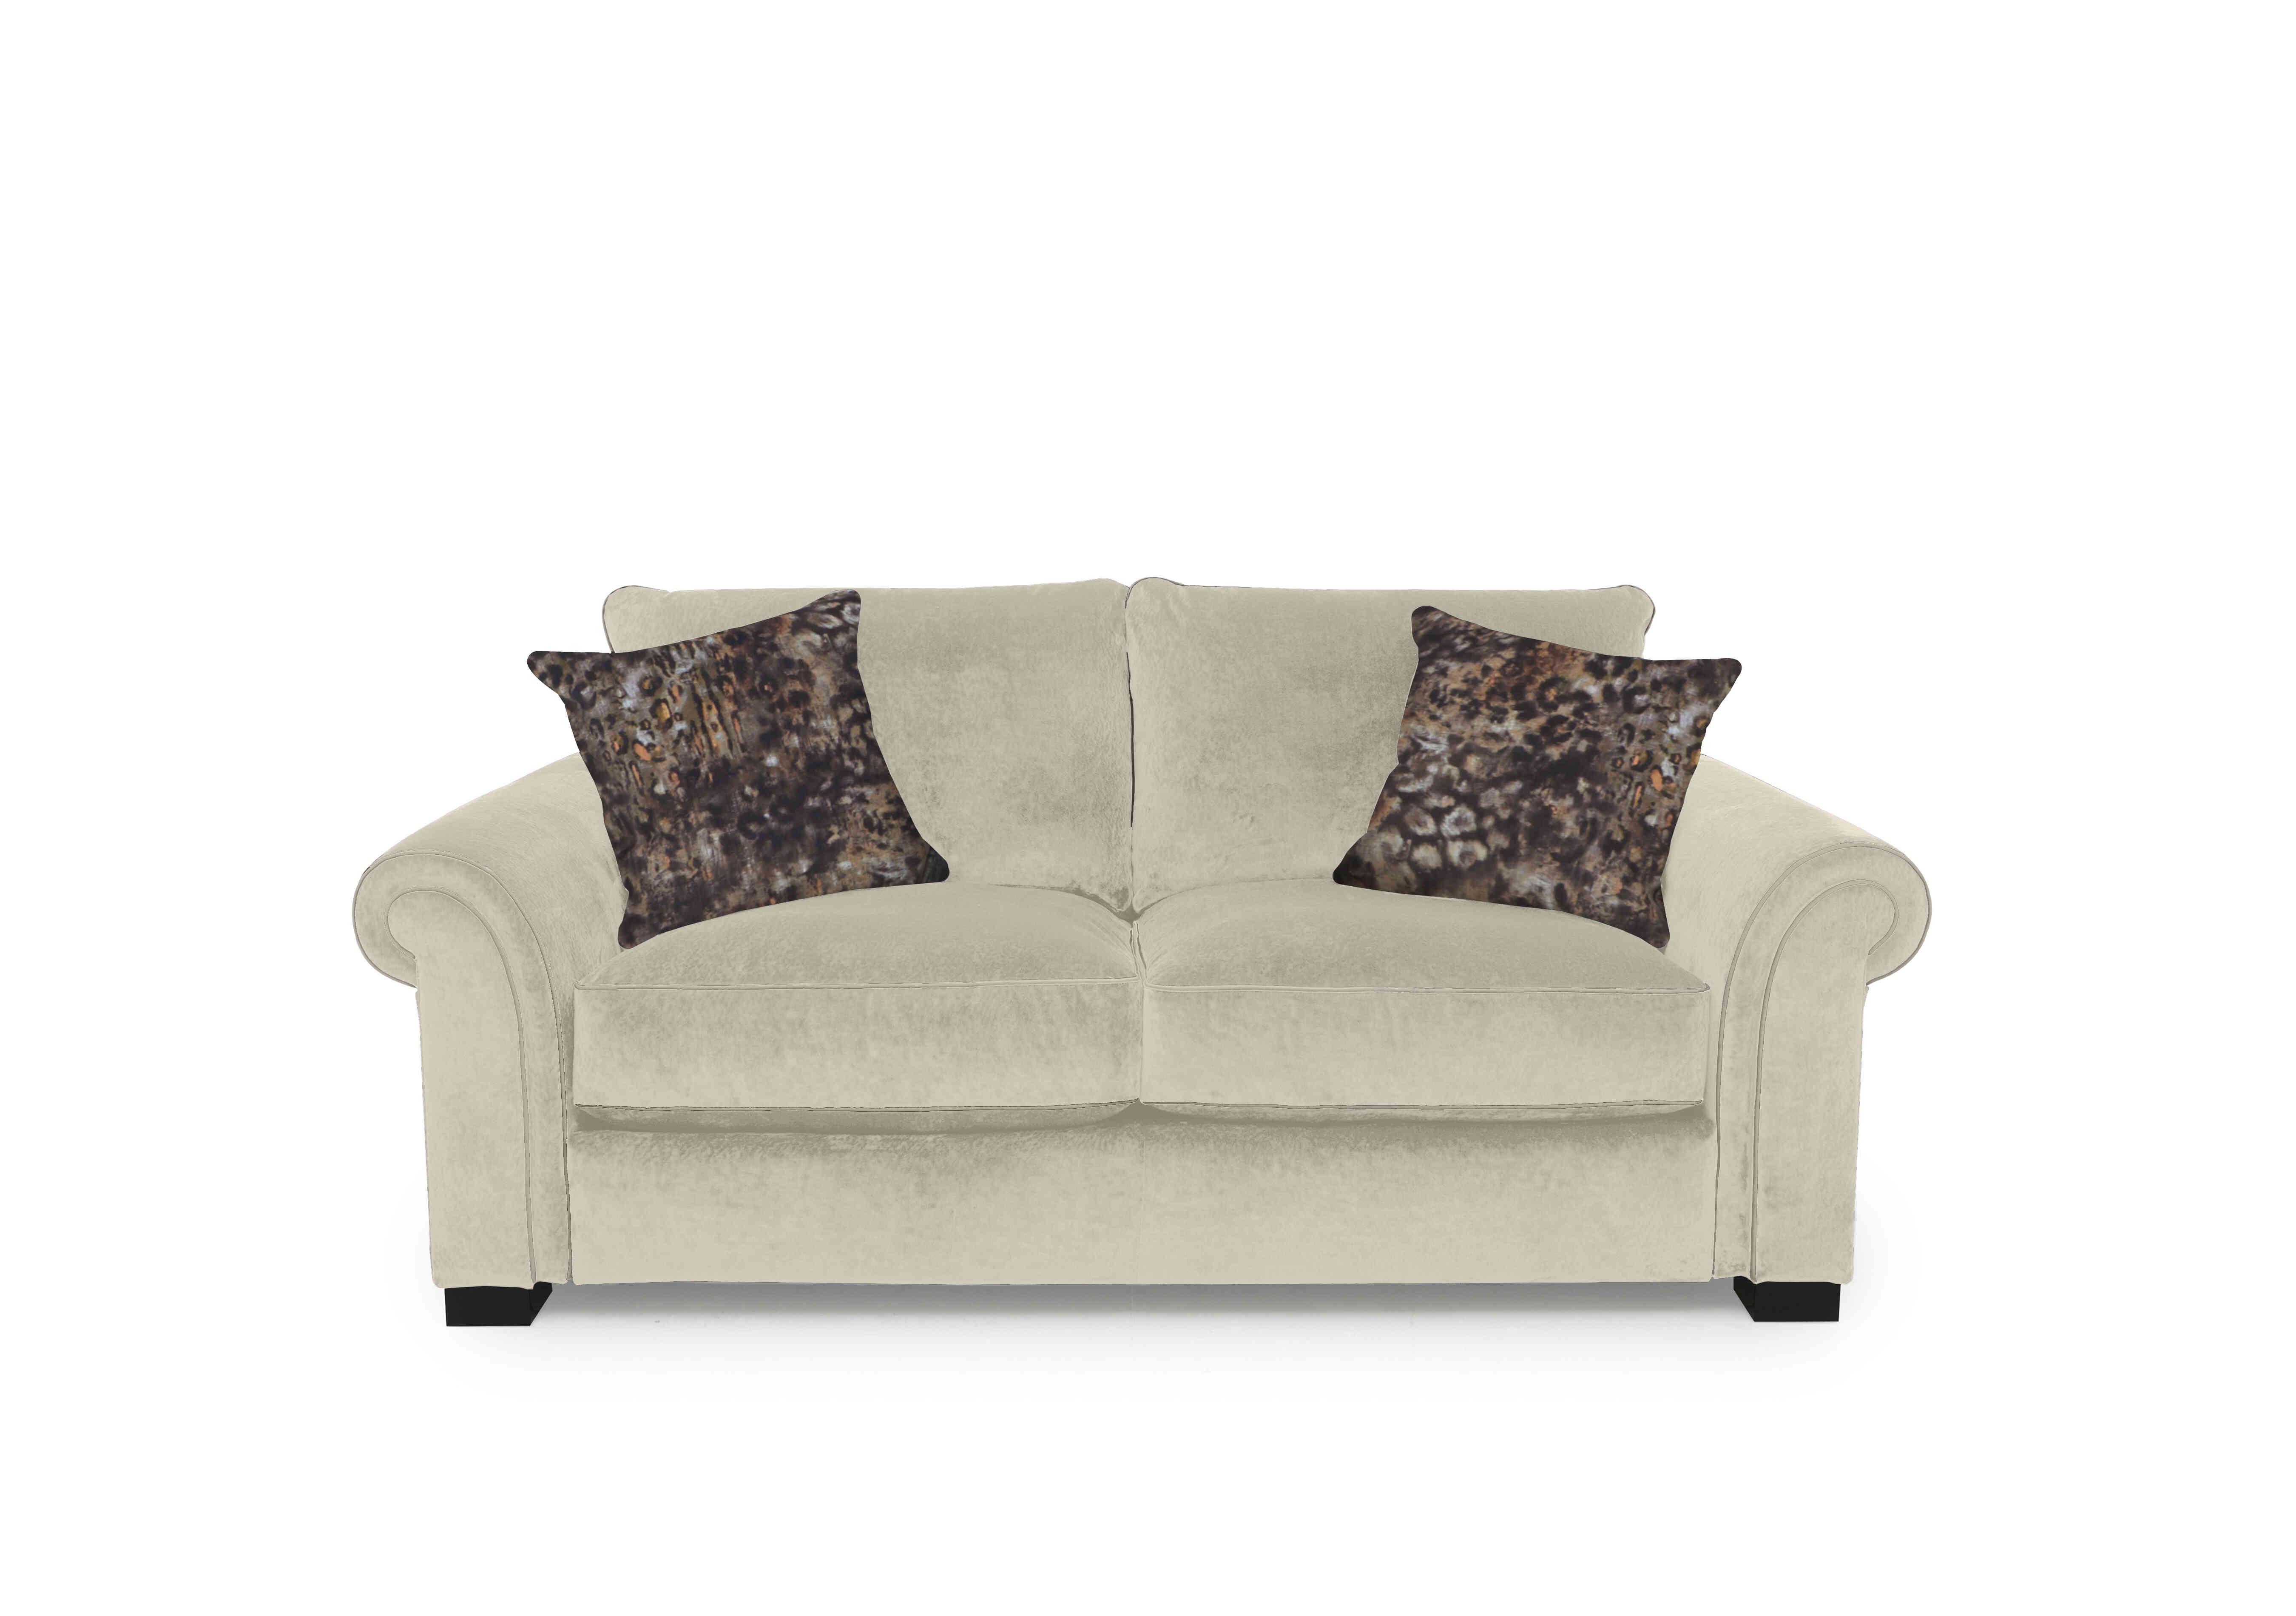 Modern Classics St James Park 2 Seater Sofa in Remini Pebble Sp Mf on Furniture Village